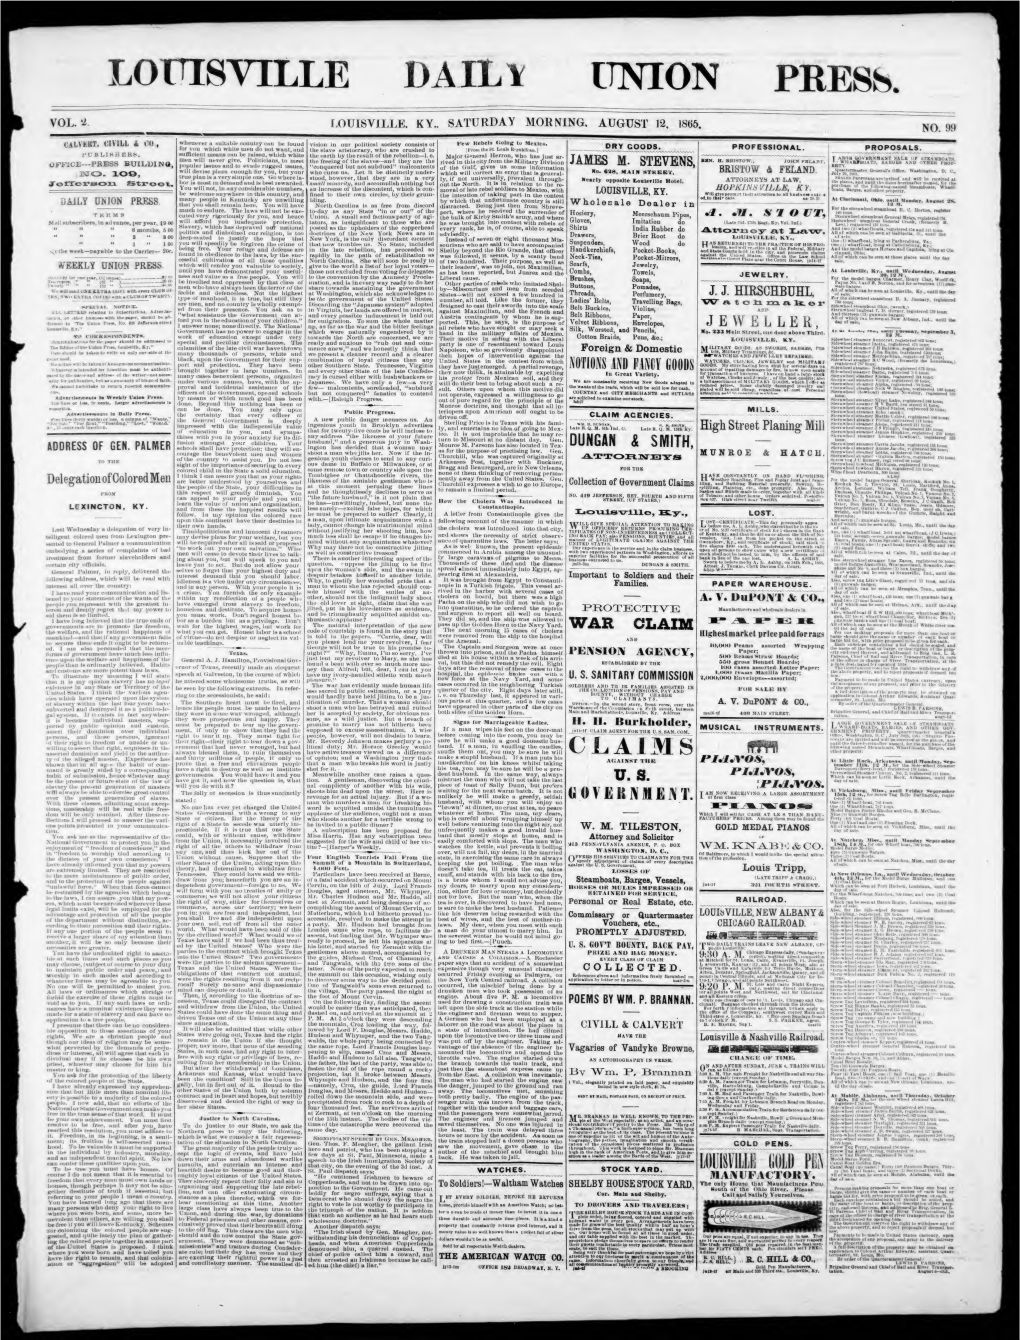 Louisville Daily Union Press: 1865-08-12